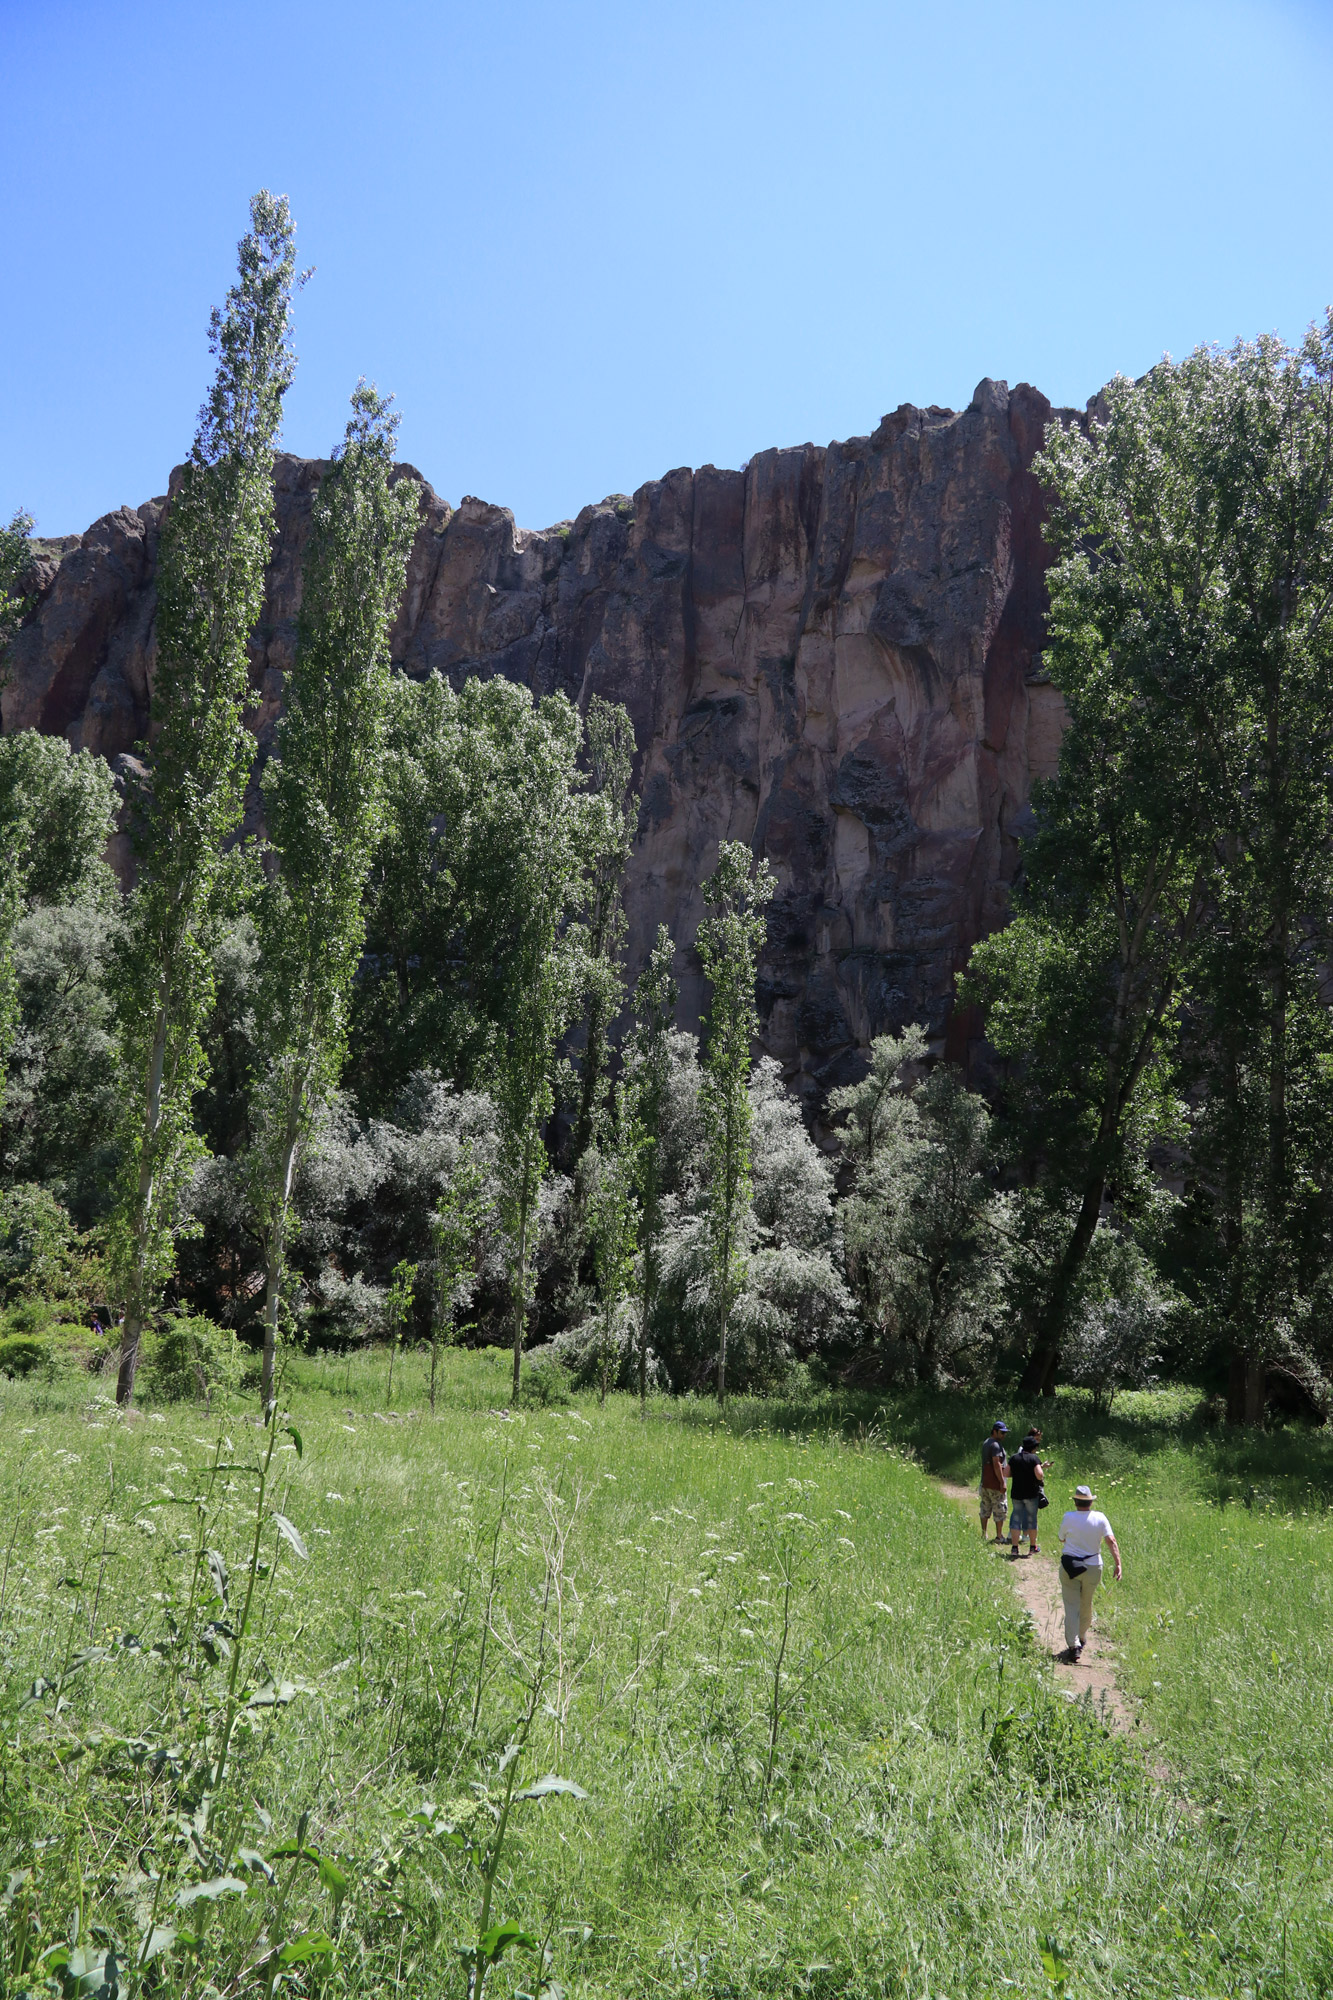 Turkije reisverslag: Laatste dag in Cappadocië - Wandeling in Ihlara Vadisi